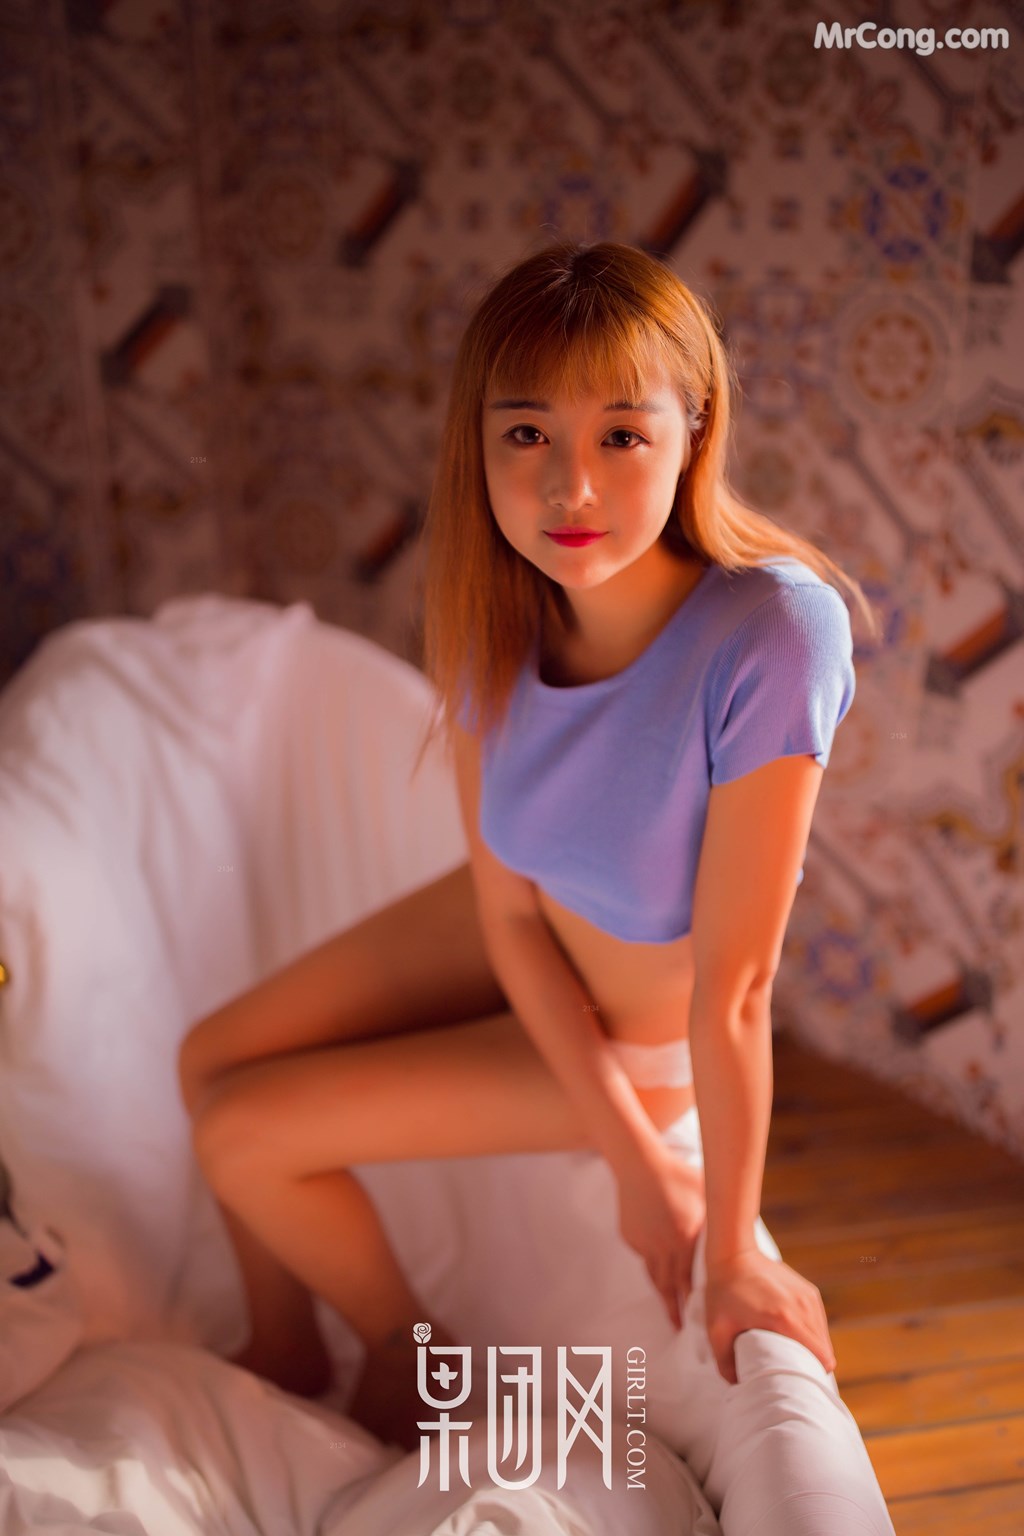 GIRLT XCJX No.021: Model Li Shi Han (李诗 涵 baby) (43 pictures)